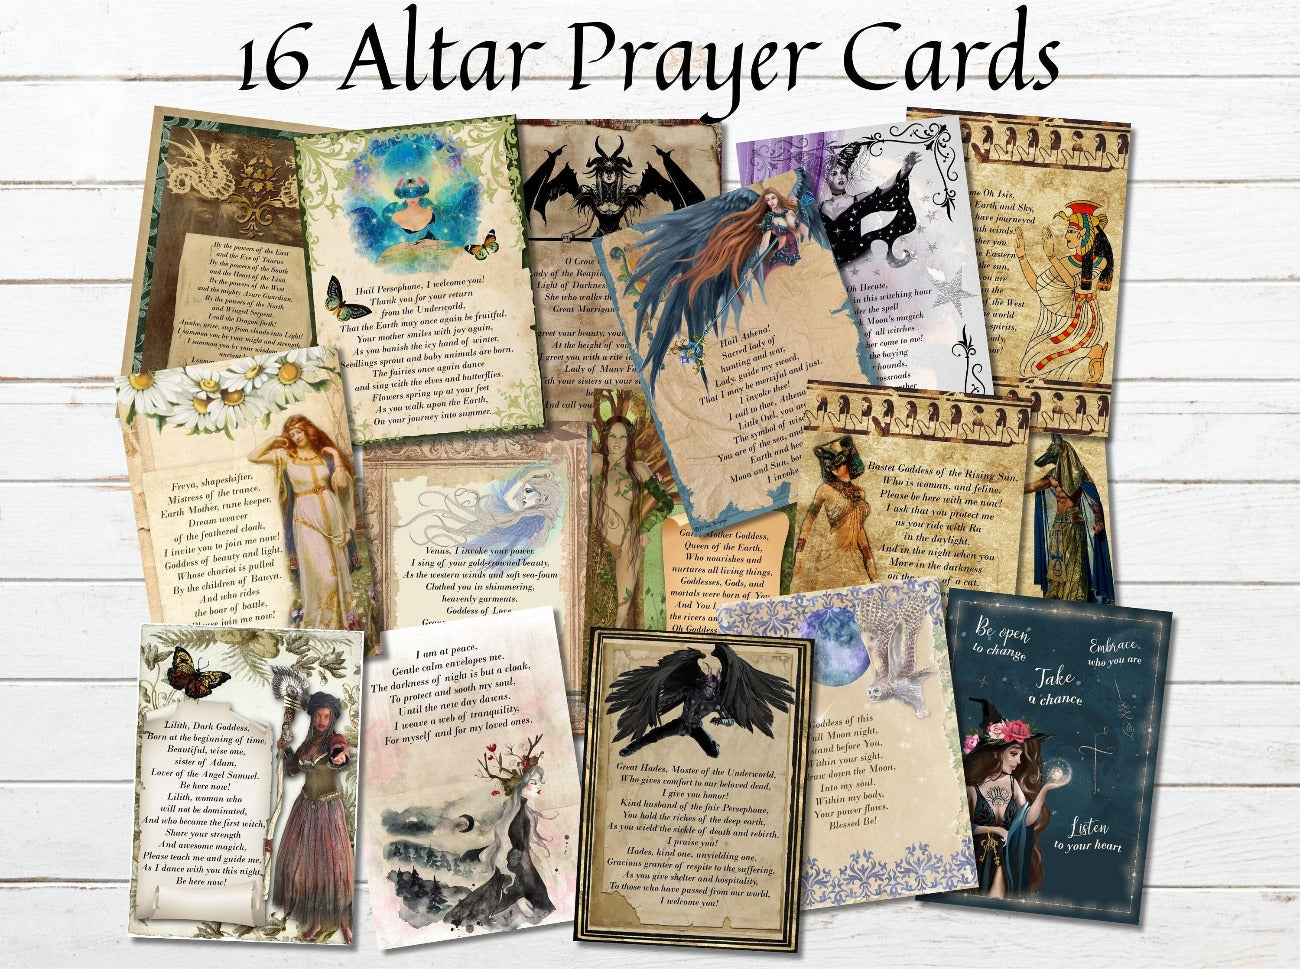 ALTAR PRAYER CARDS – 16 Wicca Pagan Deity Cards, Gratitude and Affirmations, Guidance and Spiritual Growth, Divine Goddess Inspiration - Morgana Magick Spell